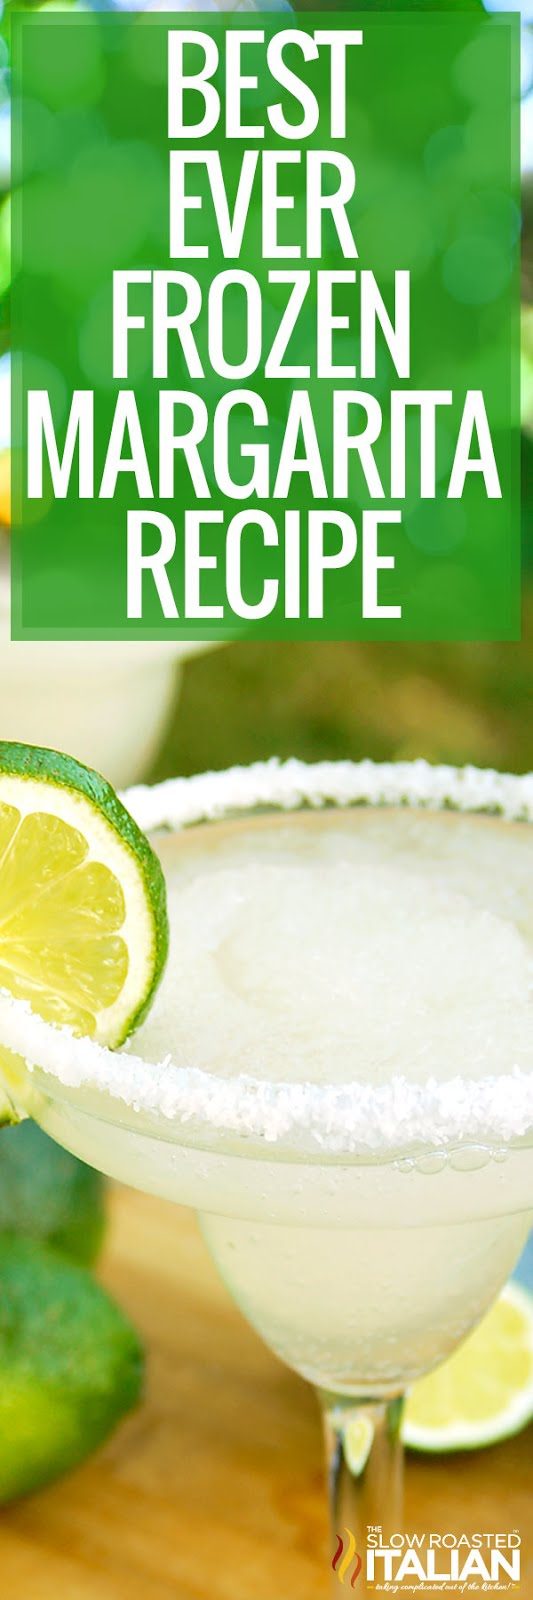 titled Pinterest photo (and shown): Best Ever Frozen Margarita Recipe